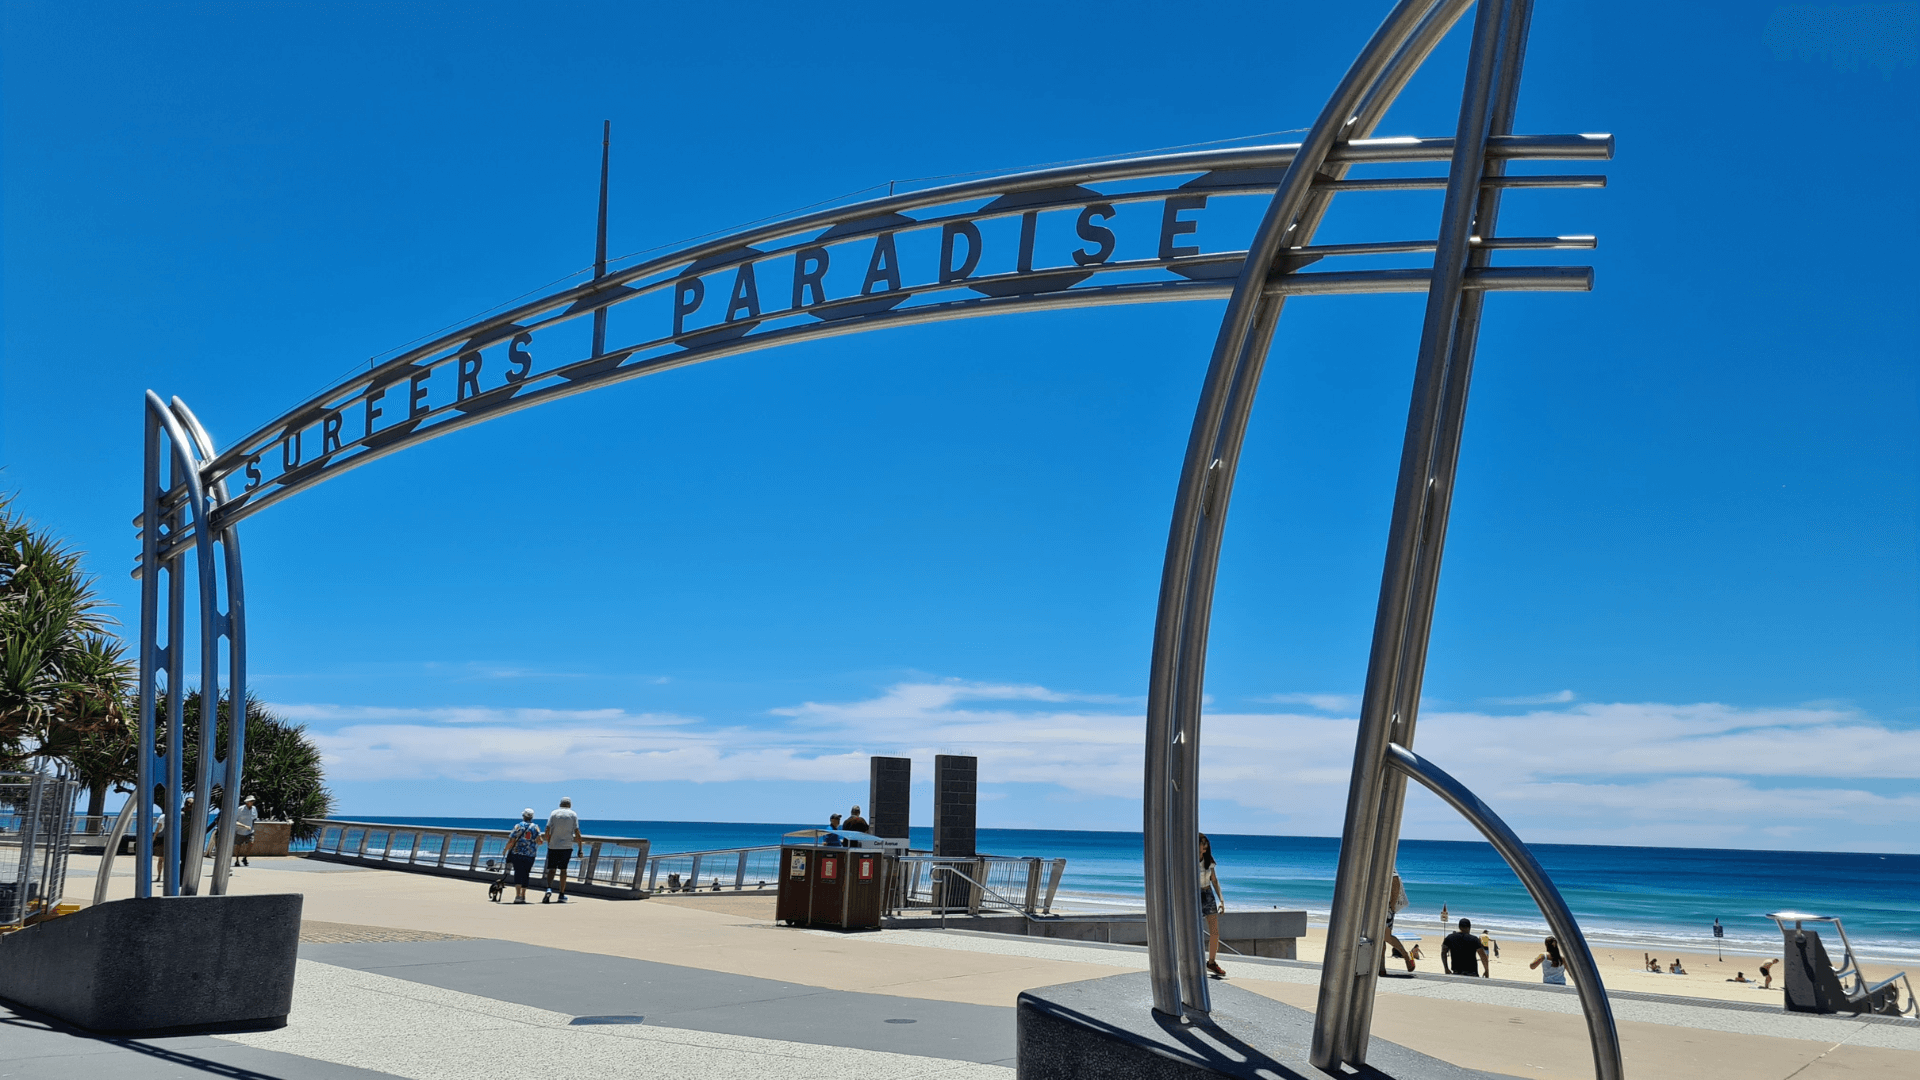  surfers-paradise-beach-sign